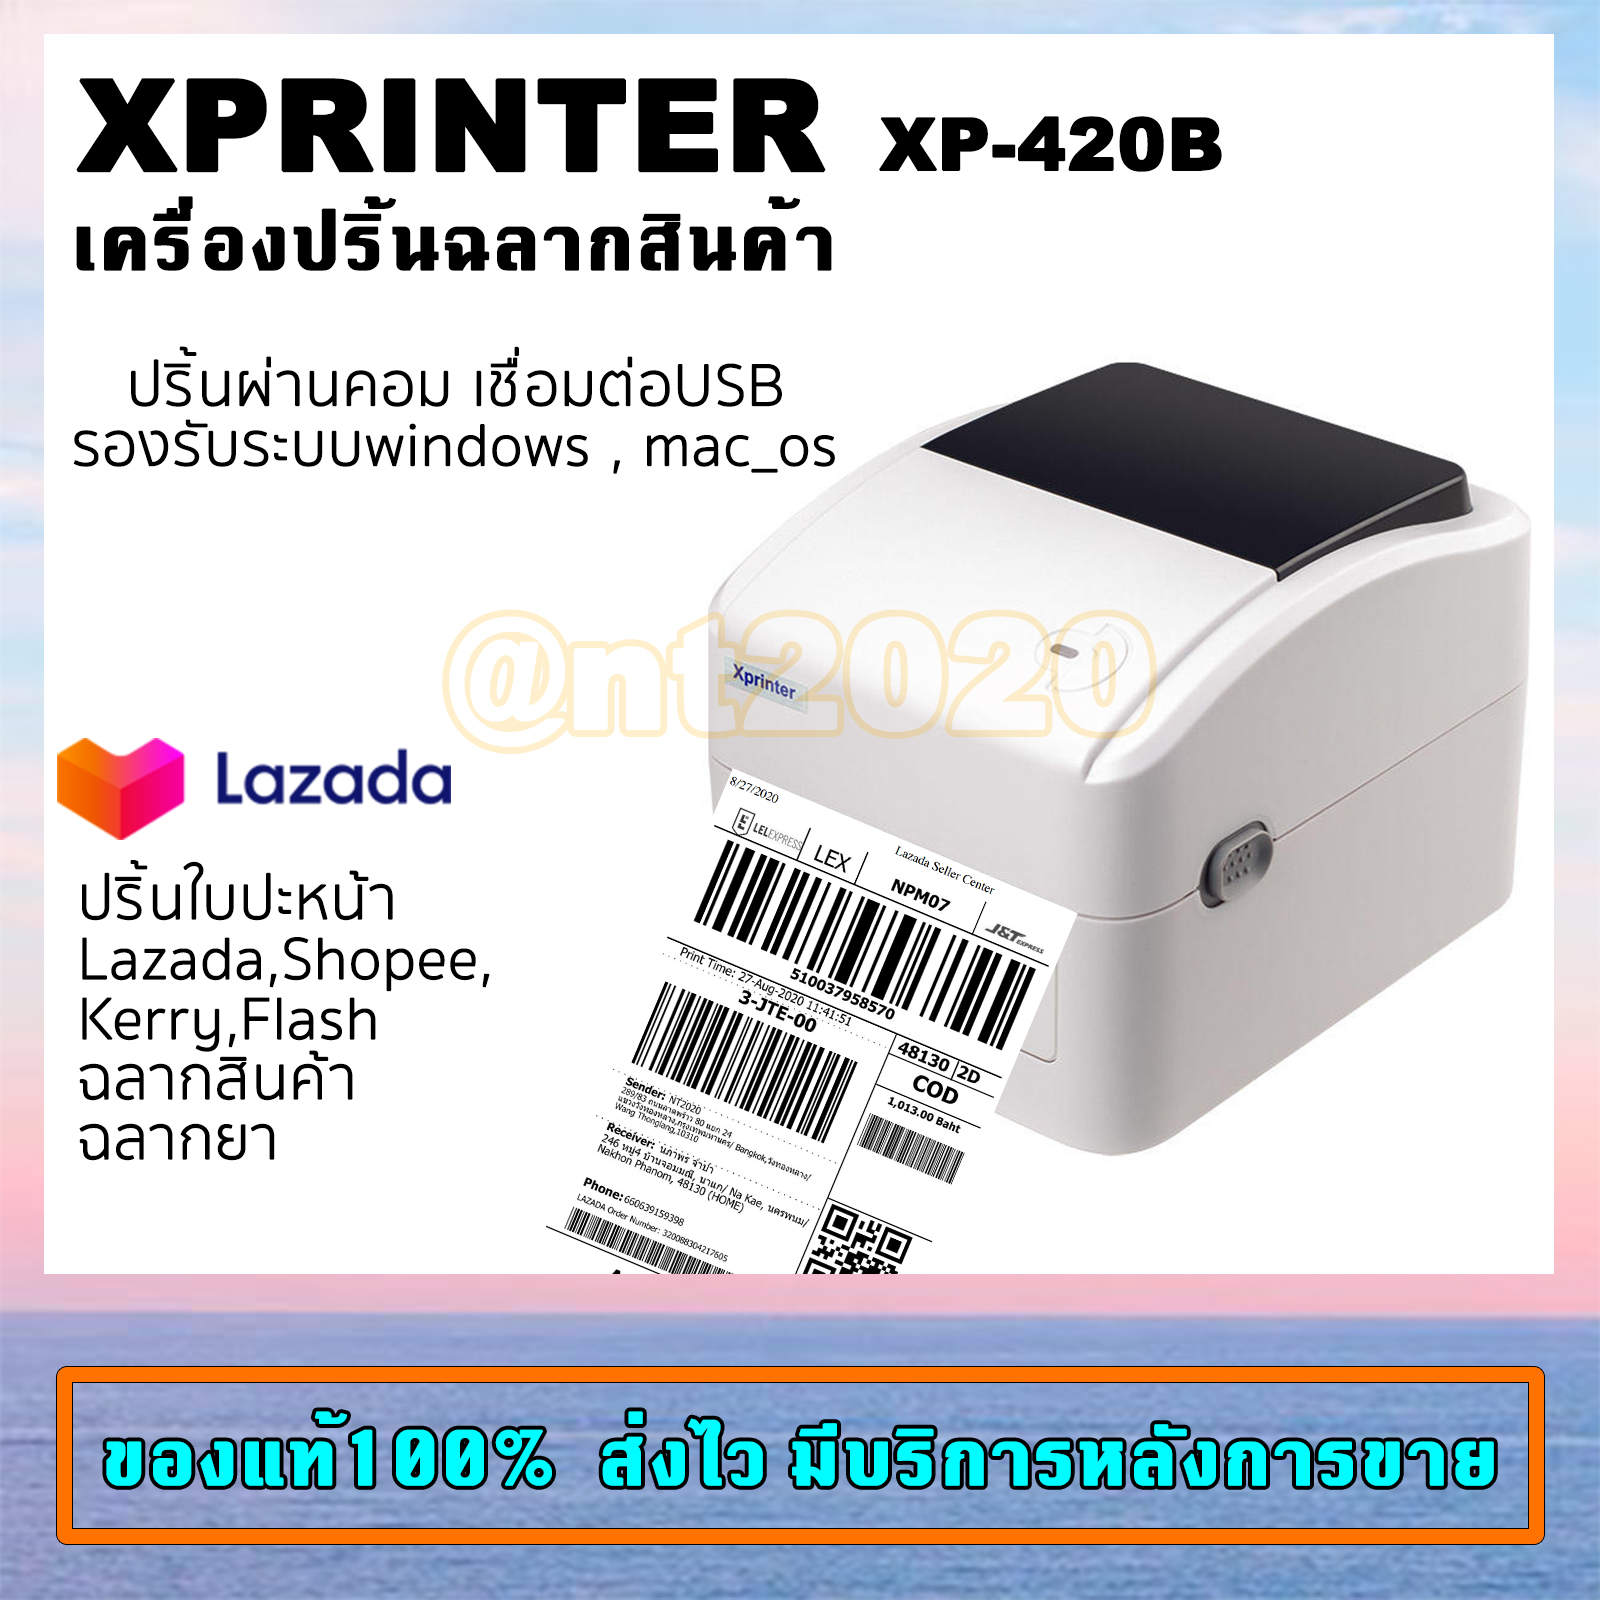 xprinter xp-420b เครื่องปริ้นฉลากสินค้า ใบปะหน้าขนส่งต่างๆ